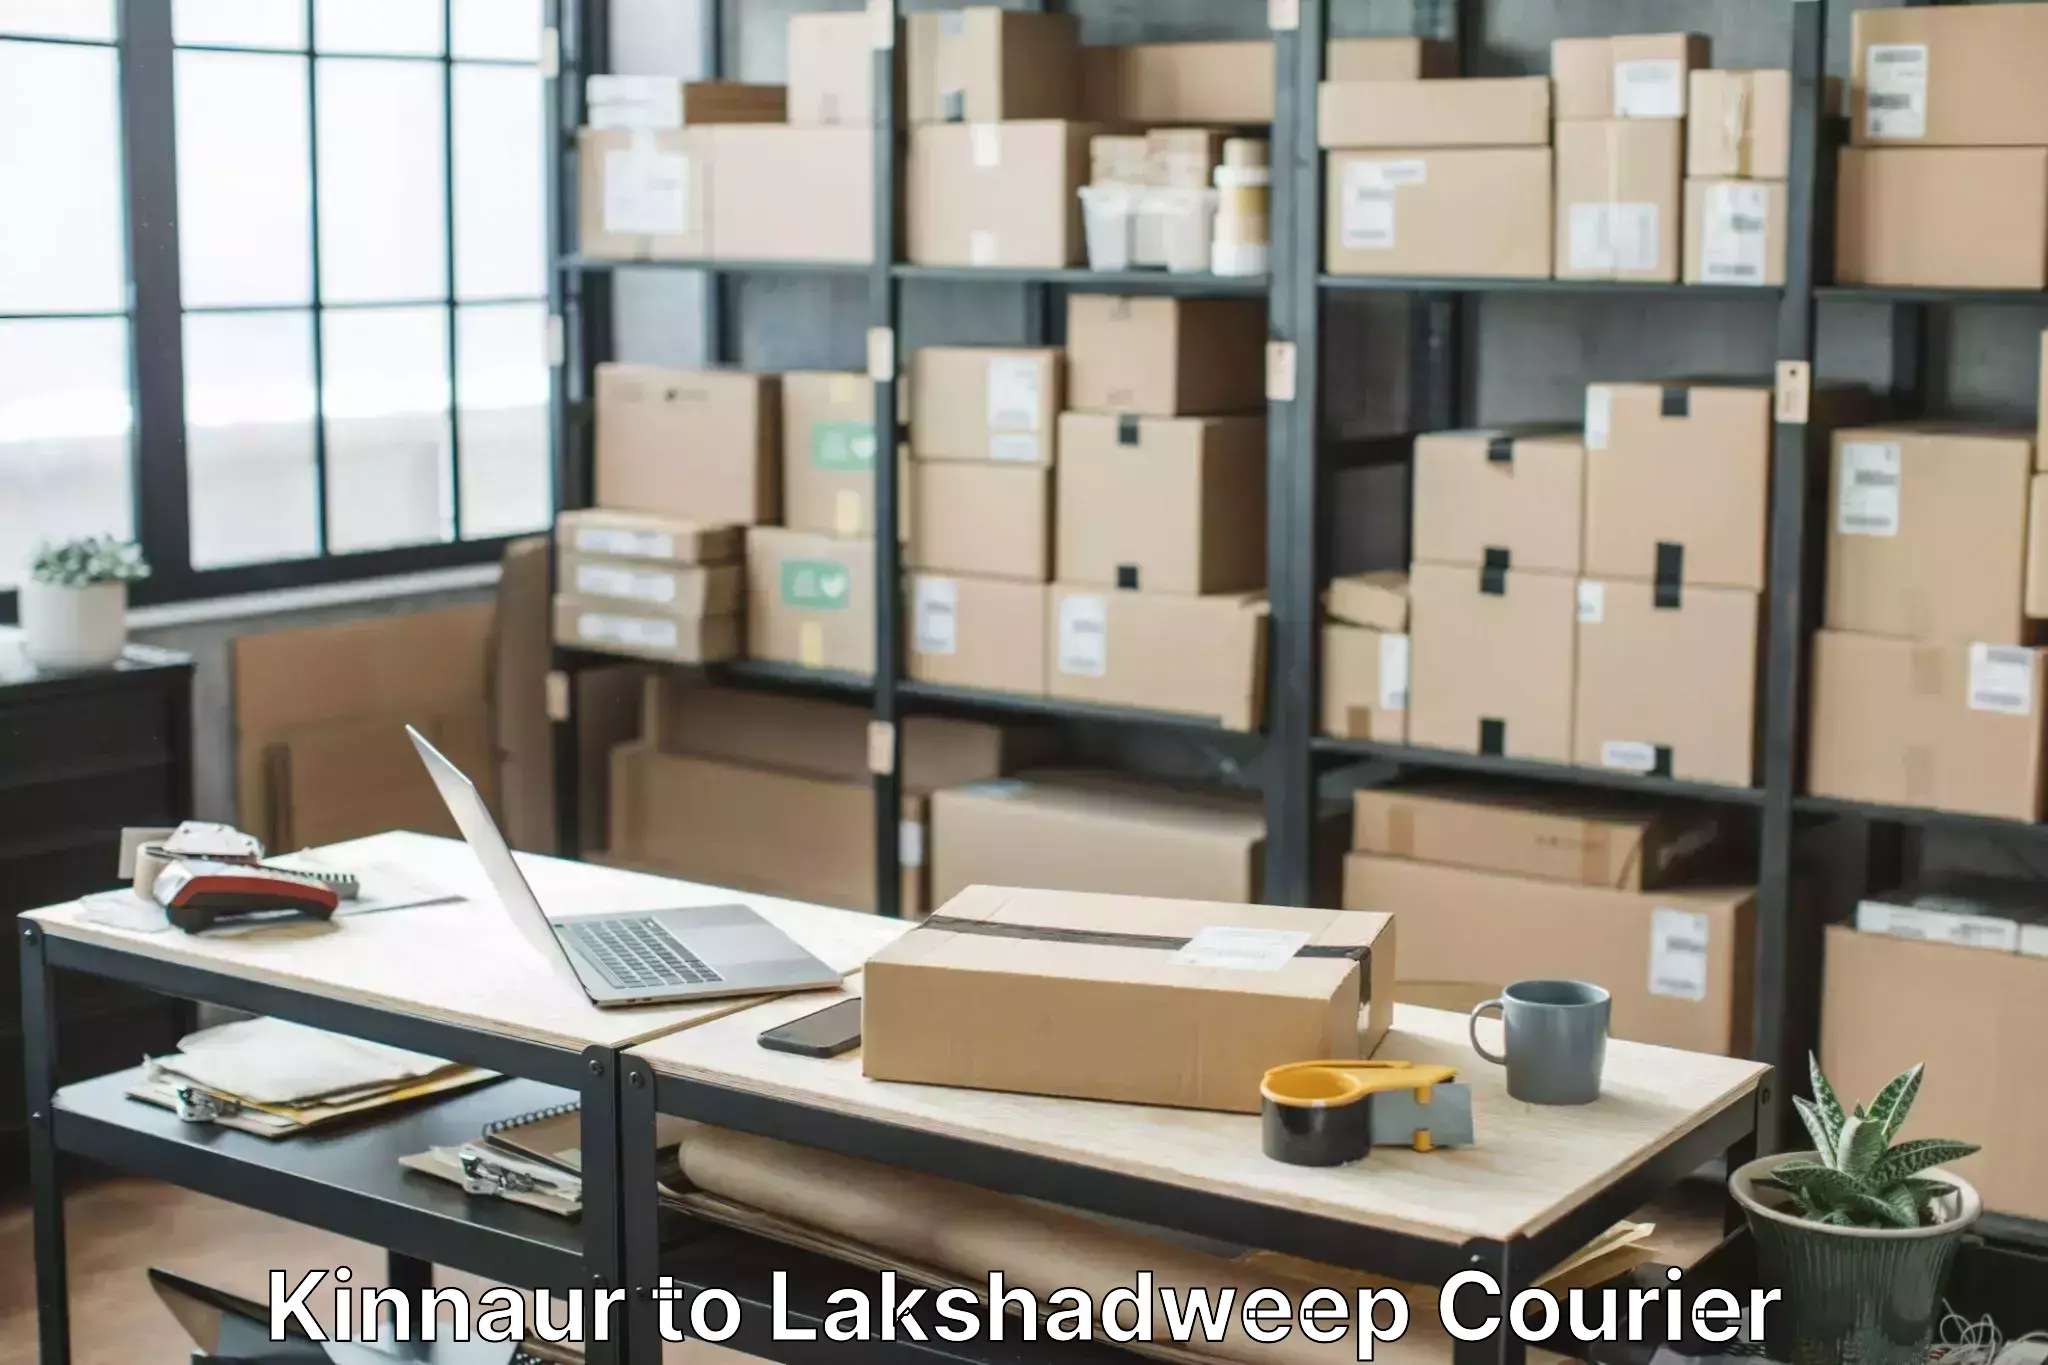 Professional moving company Kinnaur to Lakshadweep